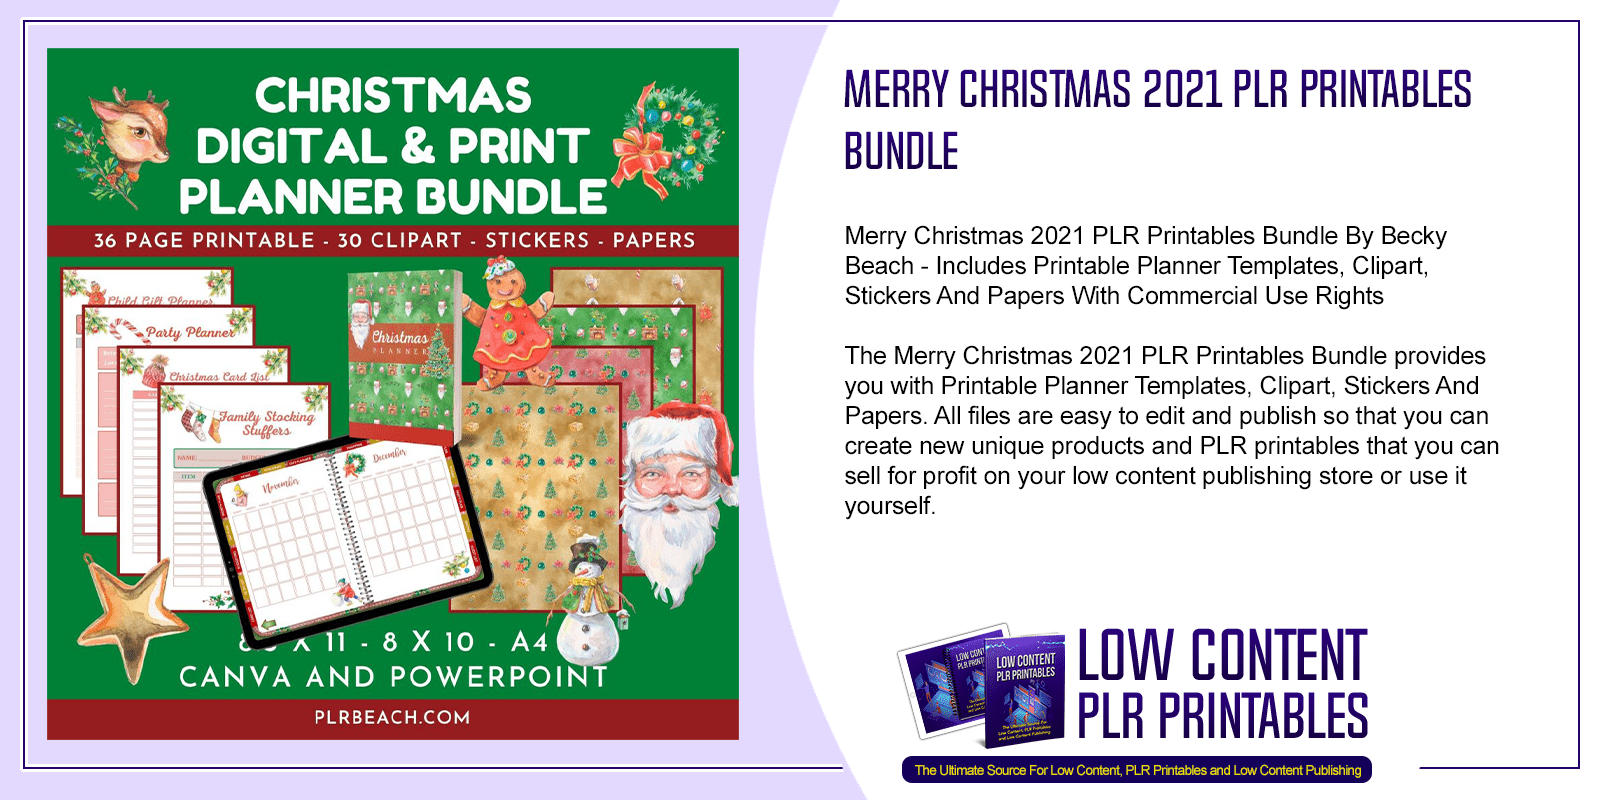 Merry Christmas 2021 PLR Printables Bundle